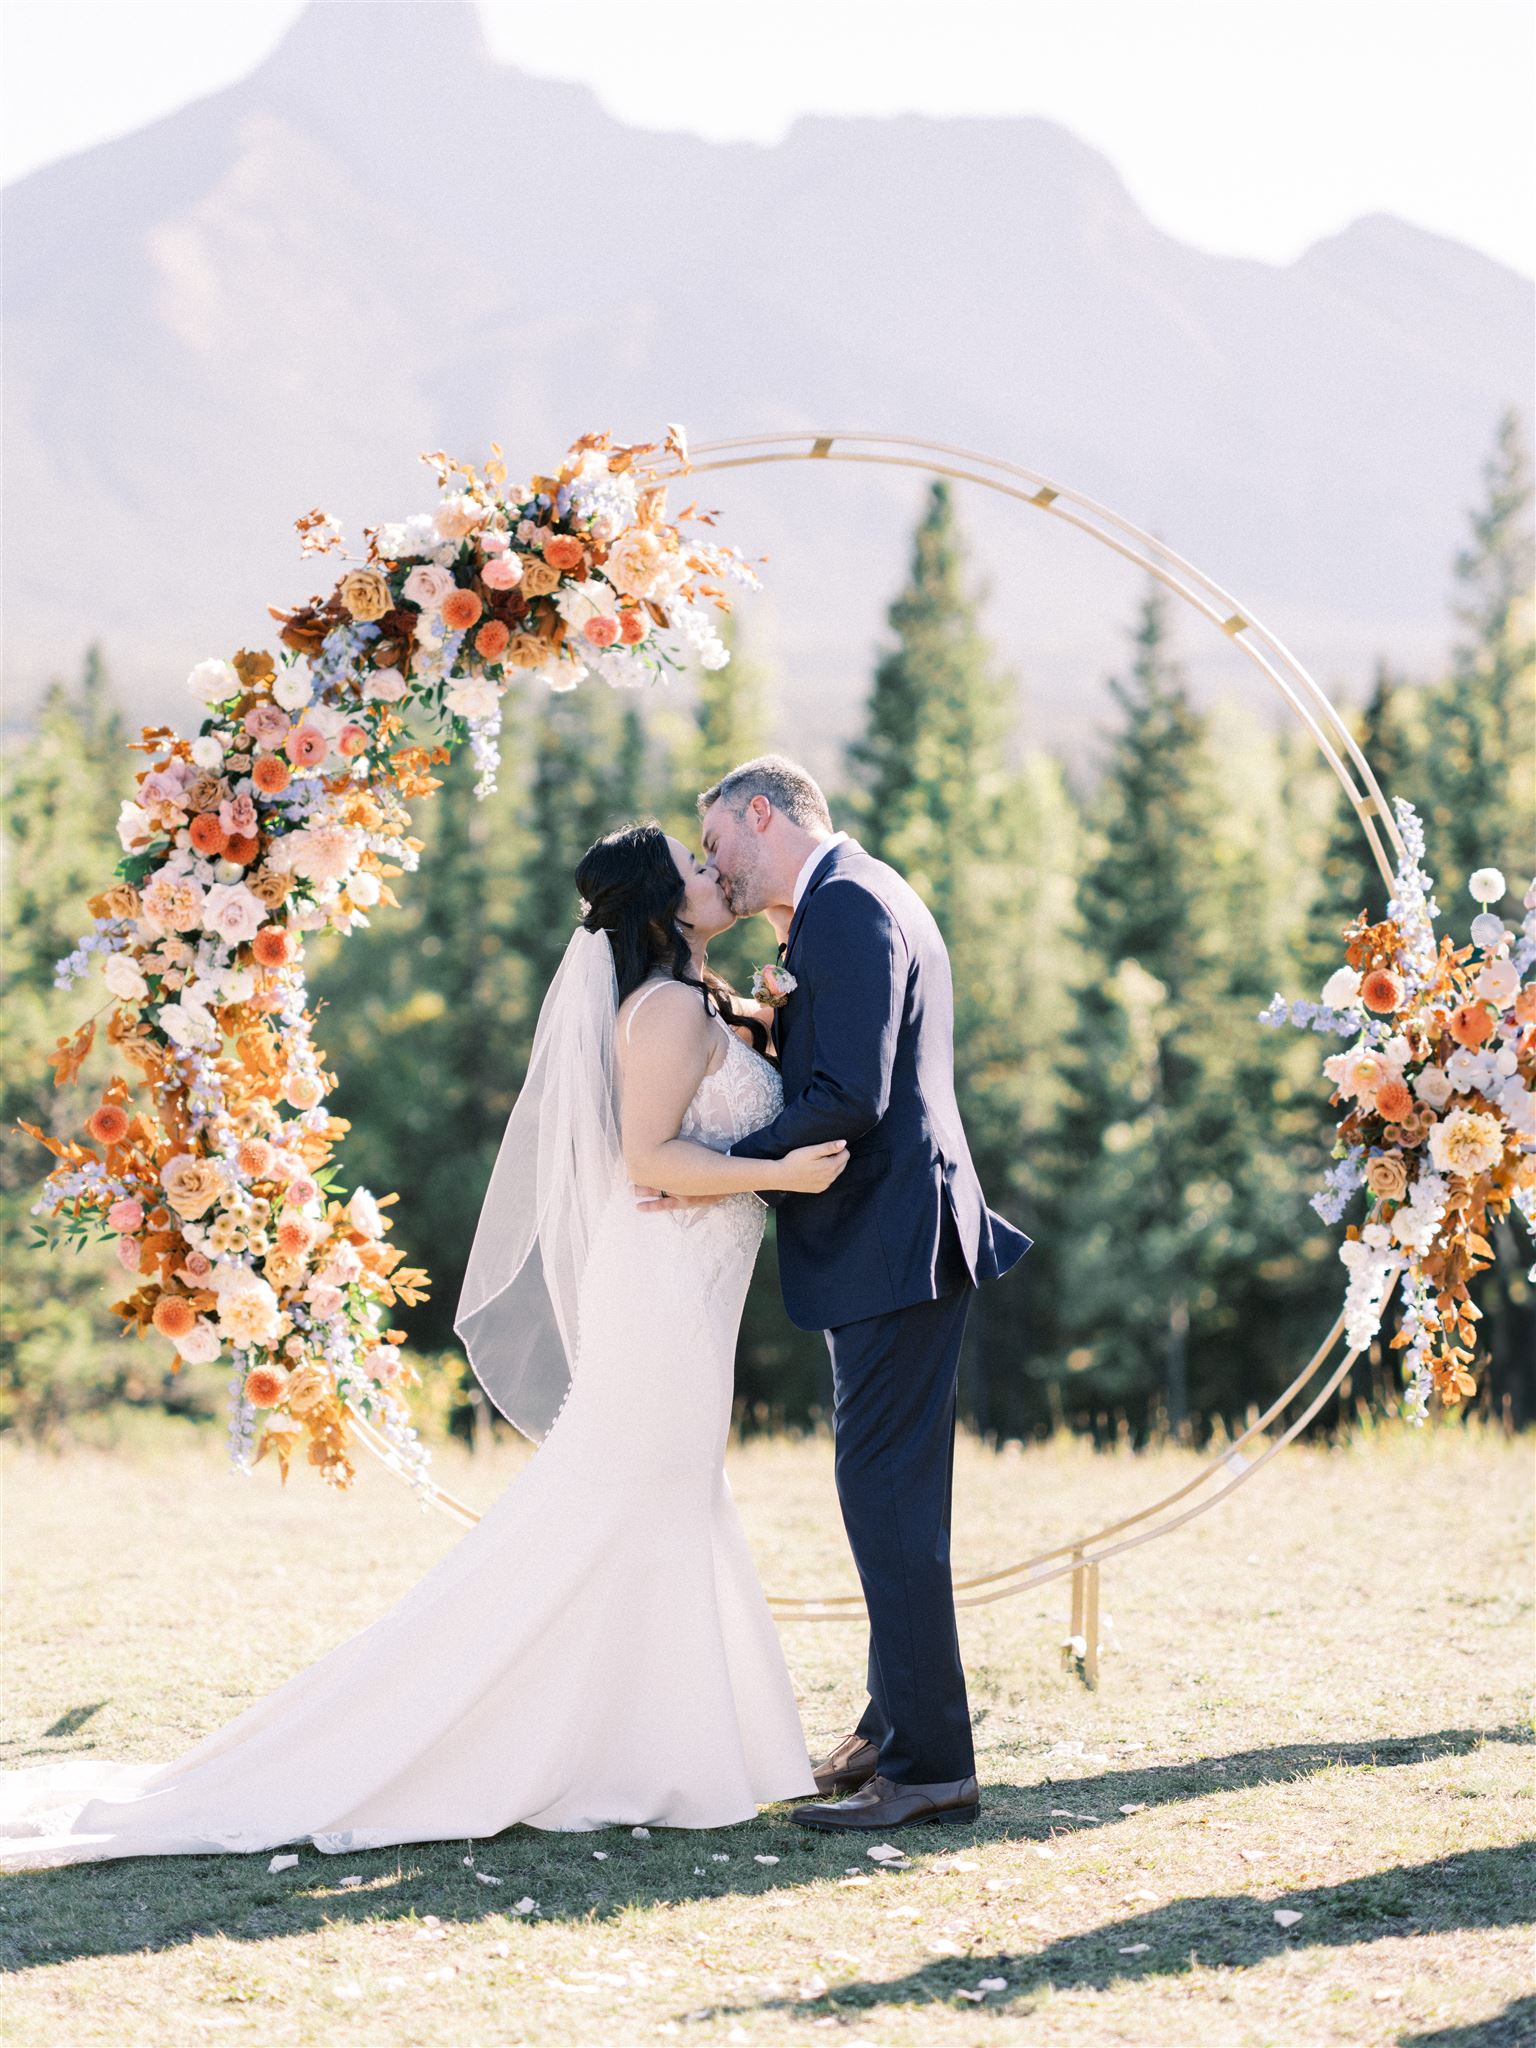 calgary wedding photographers, wedding ceremony, ceremony wedding arch, floral circle arch